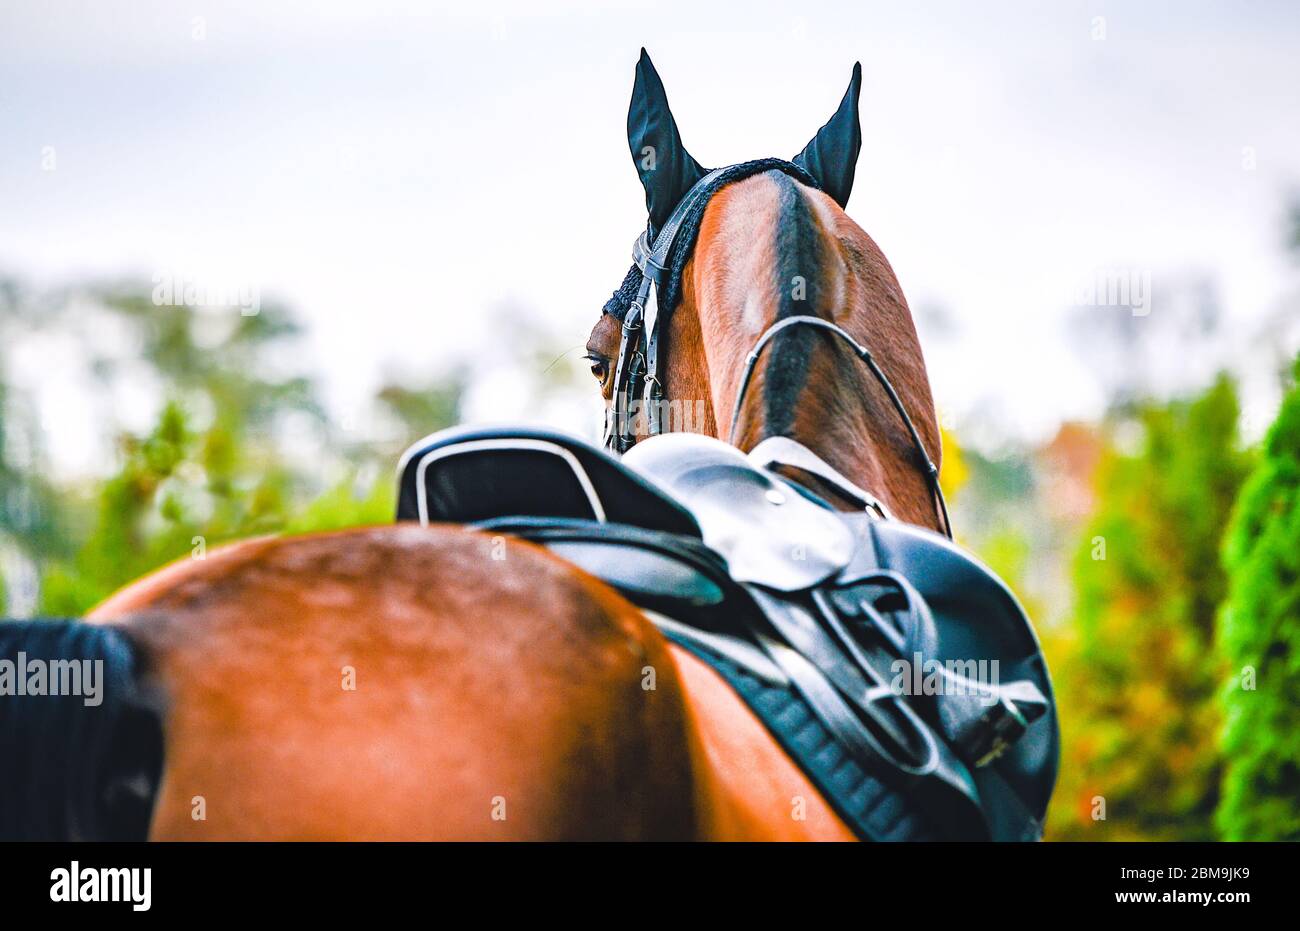 Black horse leather saddle, black saddle blanket and stirrups with dark straps dressed on the horse. Beautiful sorrel horse with bridle looking back. Stock Photo